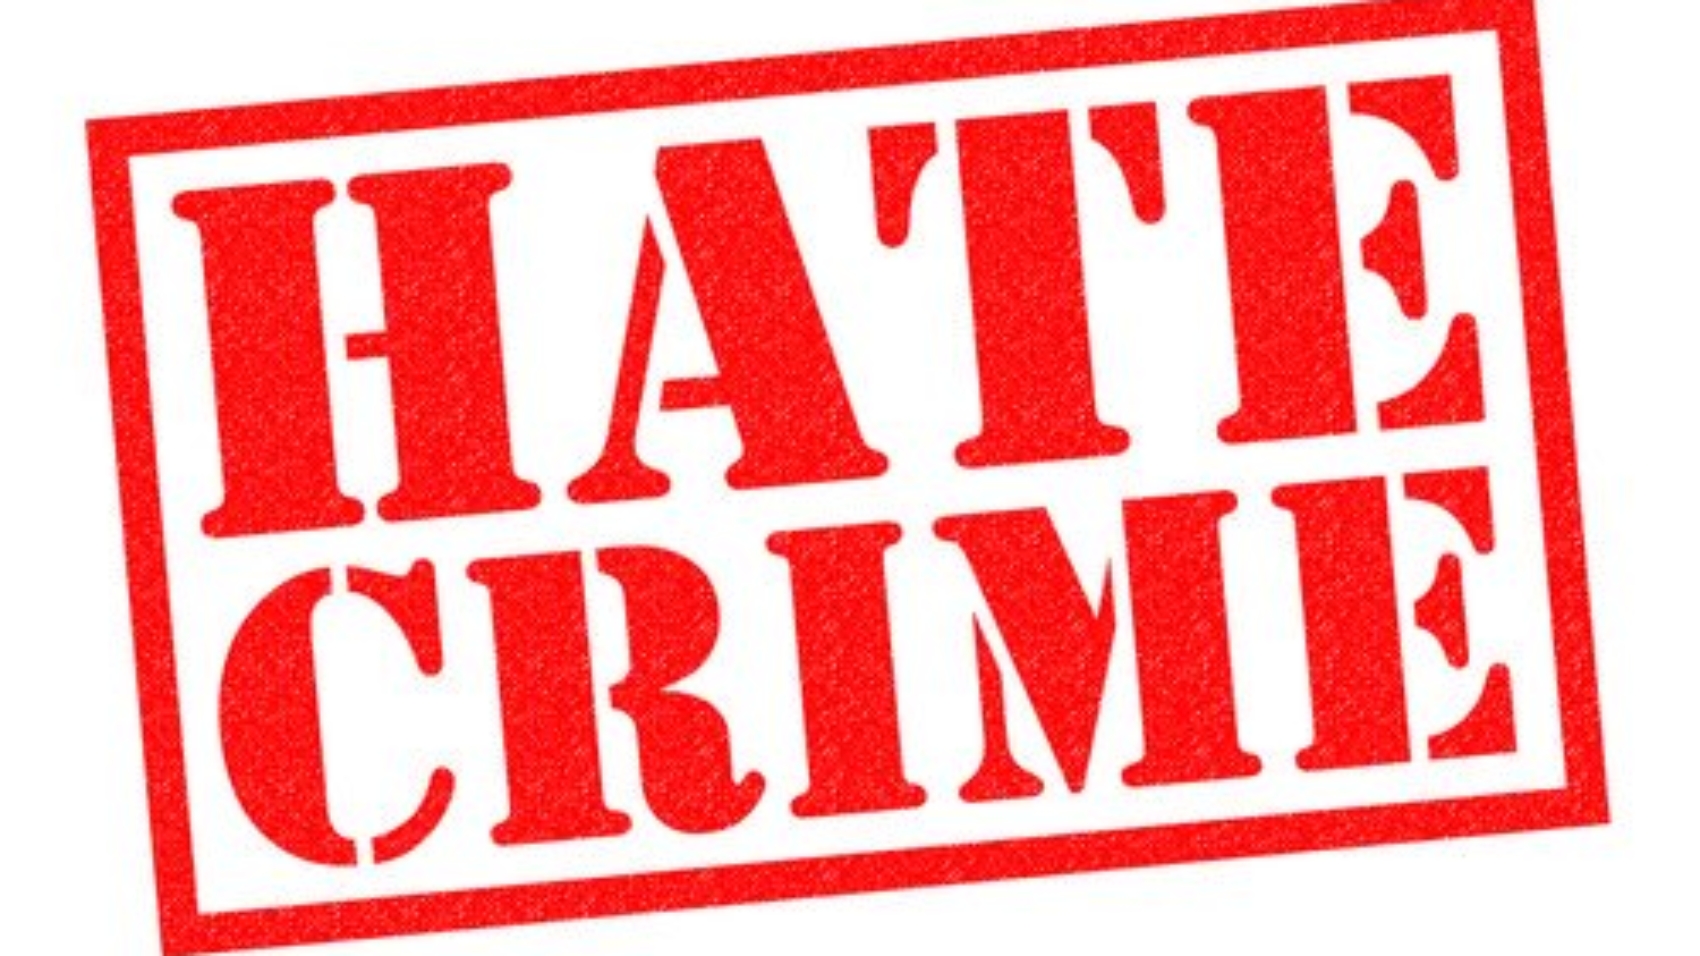 hate-crime